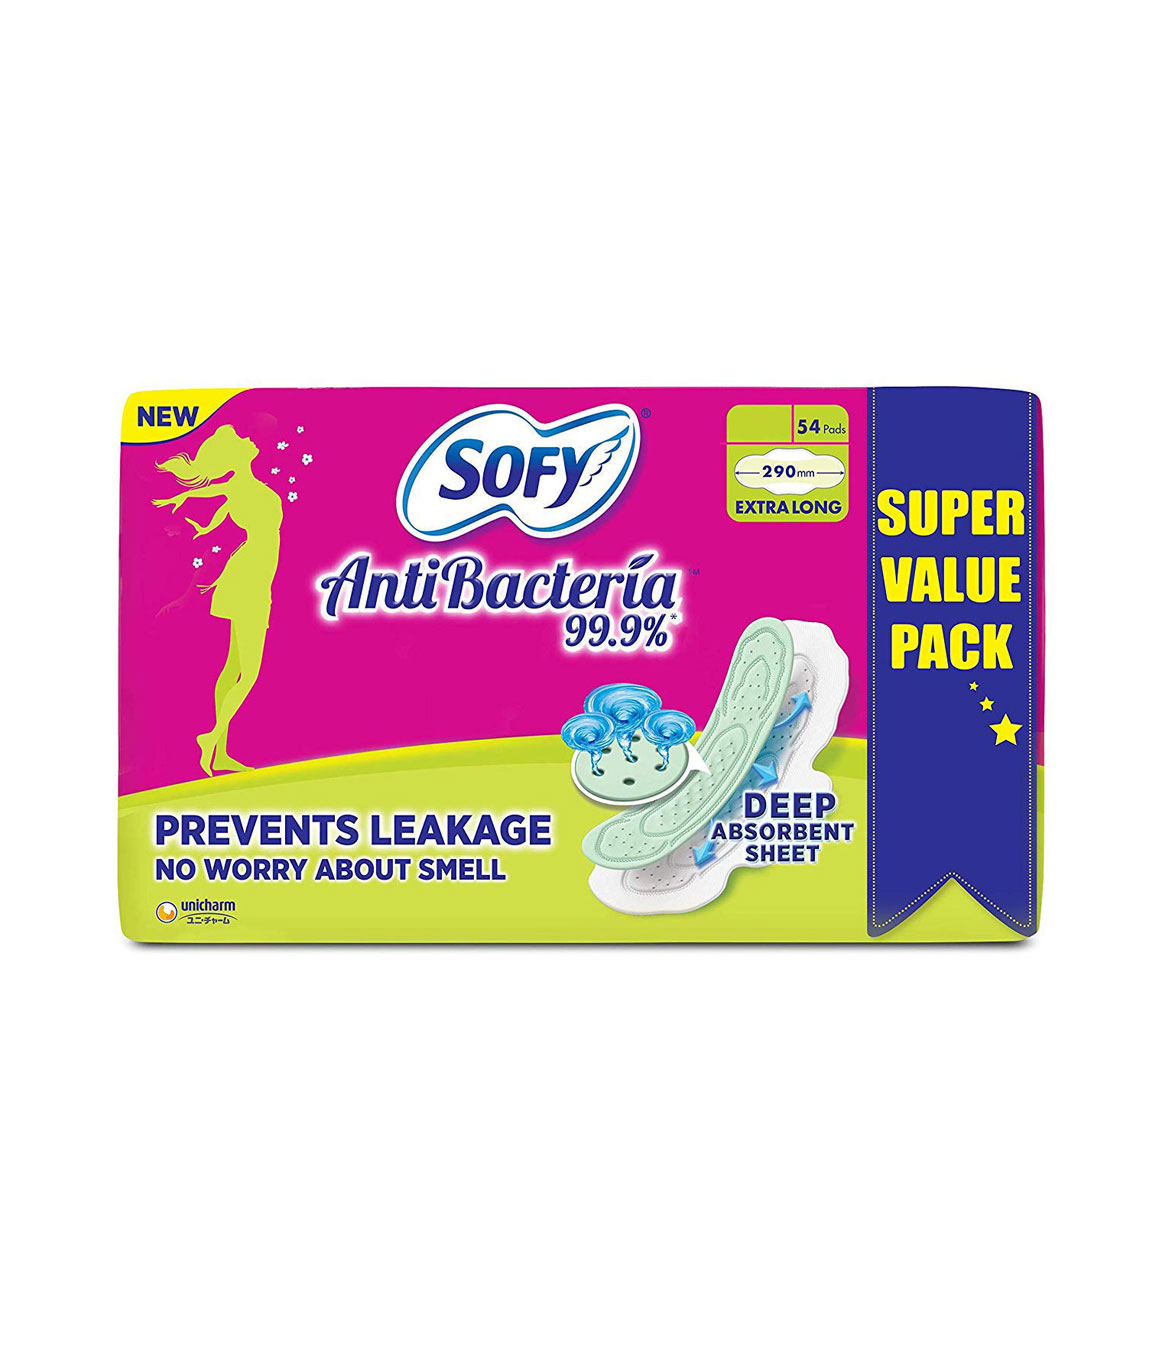 Sofy Antibacteria Extra Long Pads - 54 Count